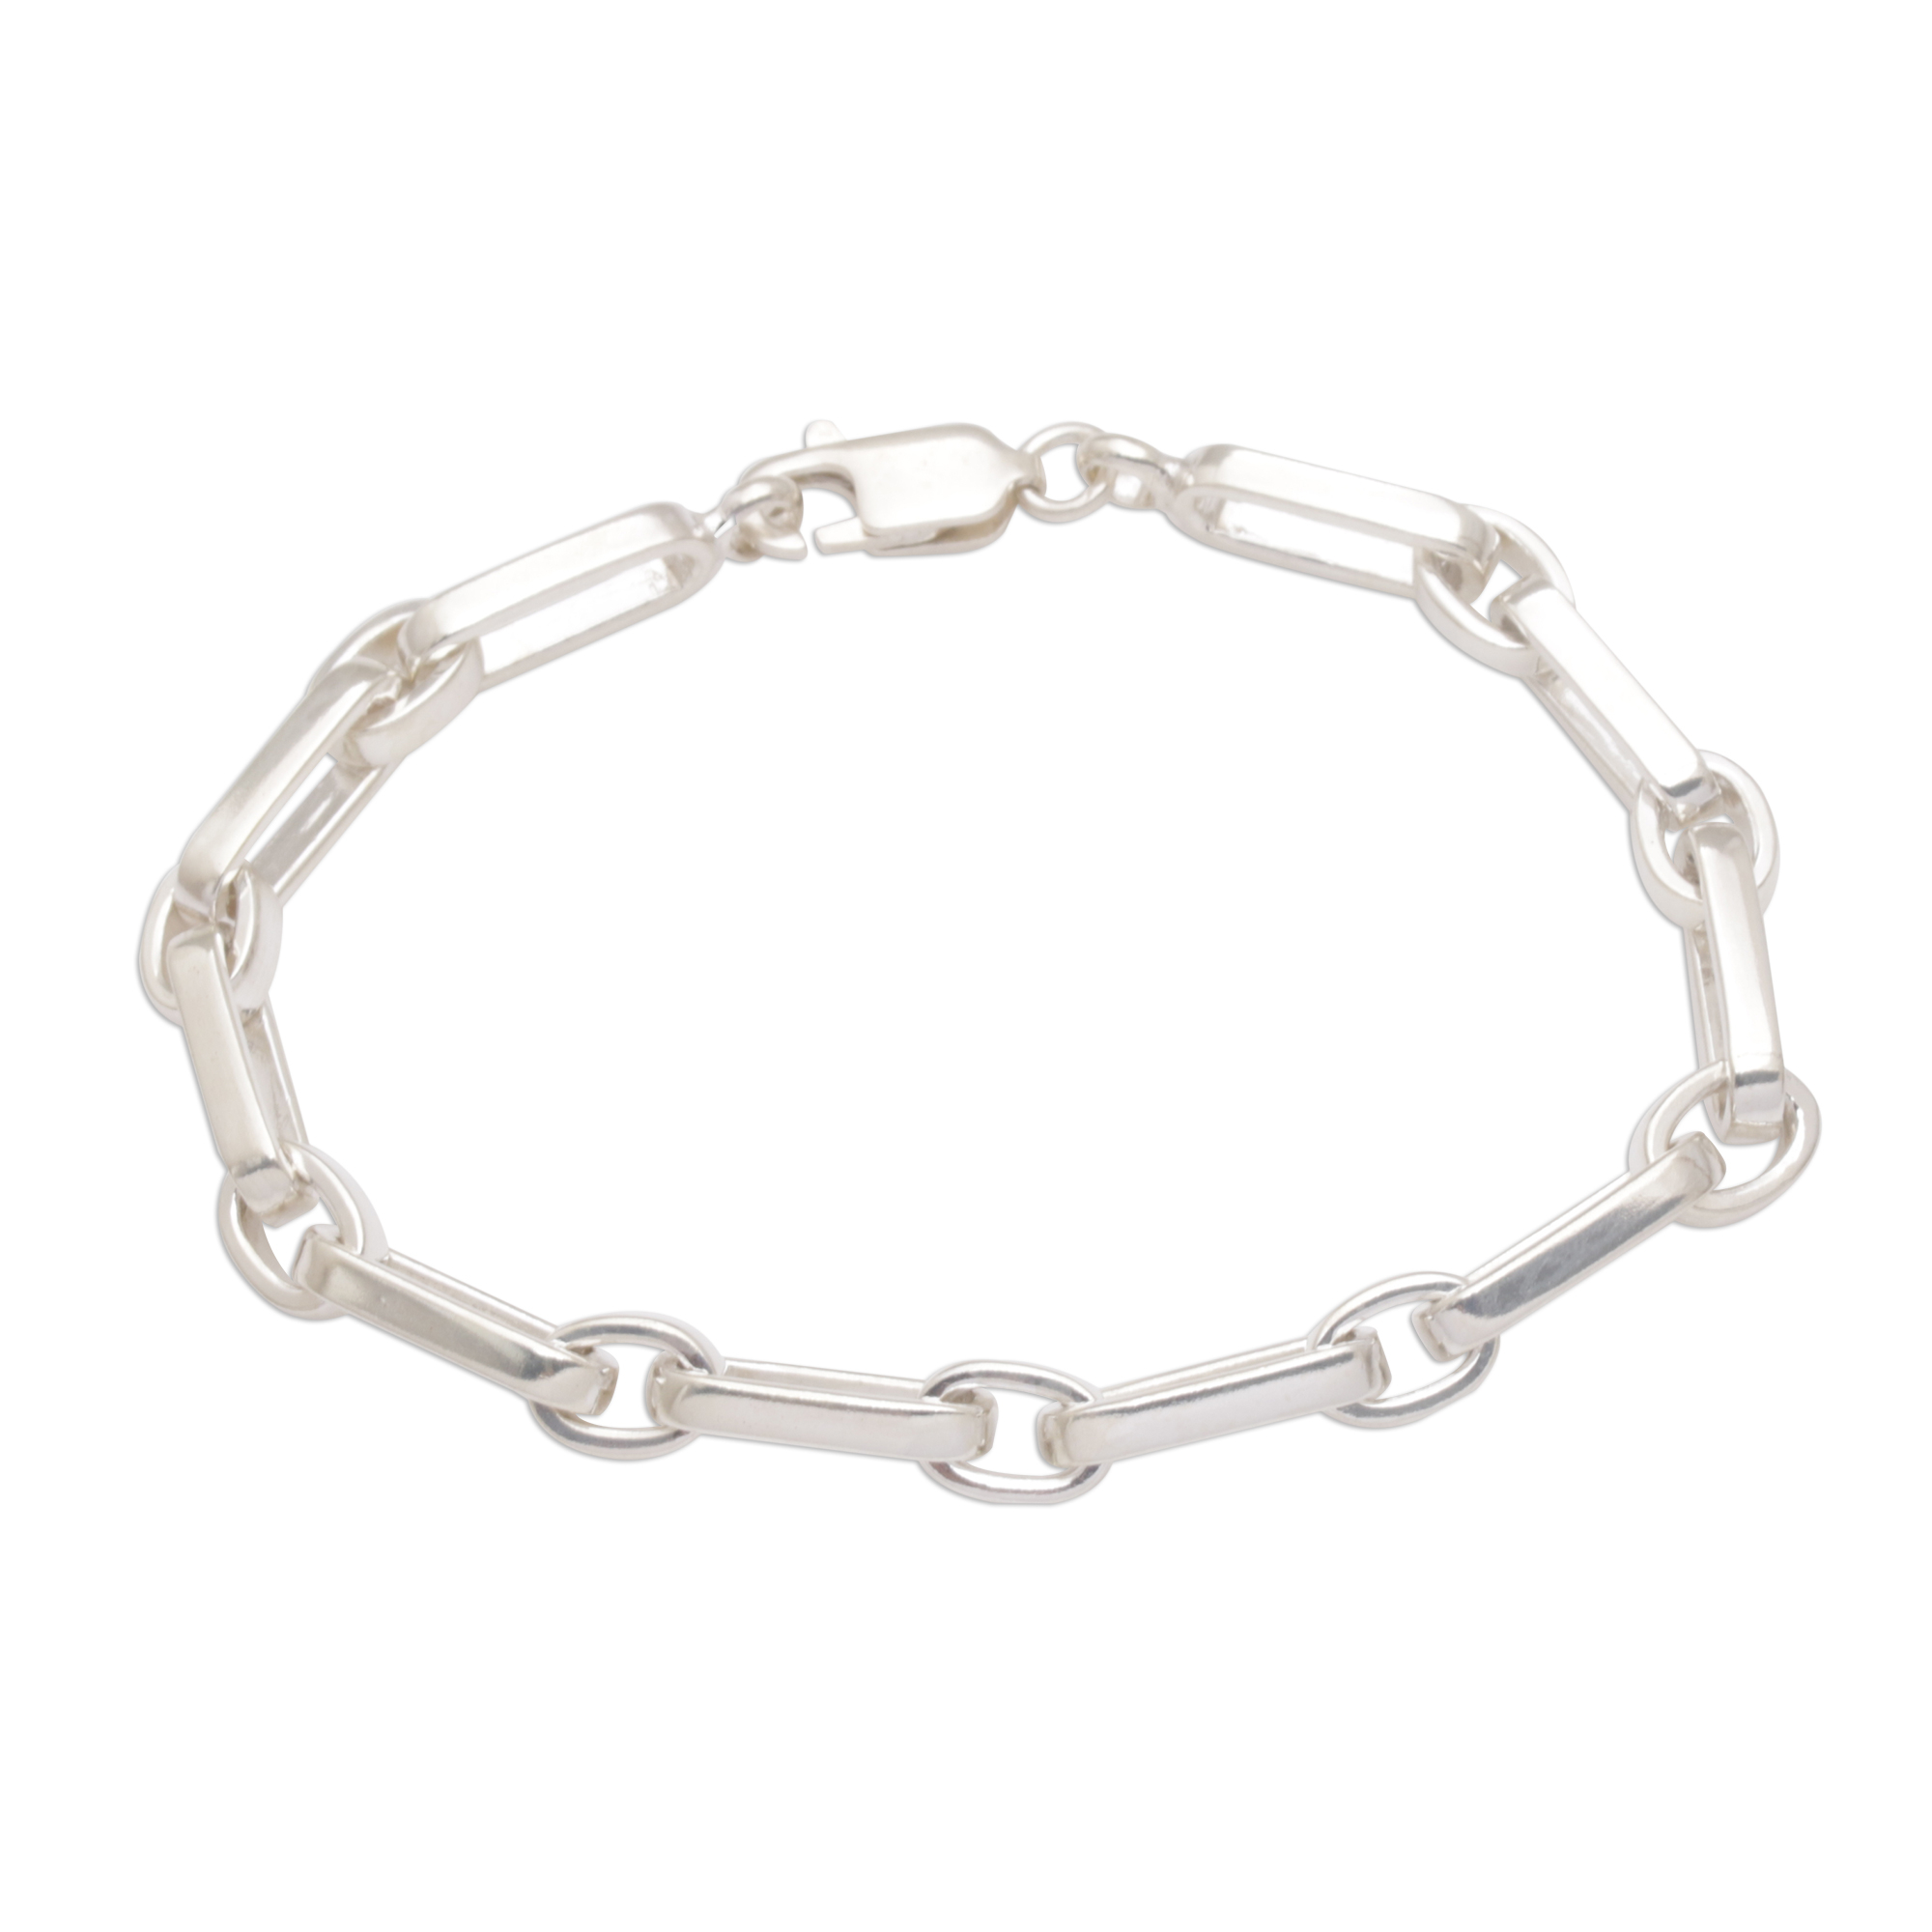 UNICEF Market | Handmade Sterling Silver Link Bracelet from Bali - Unified